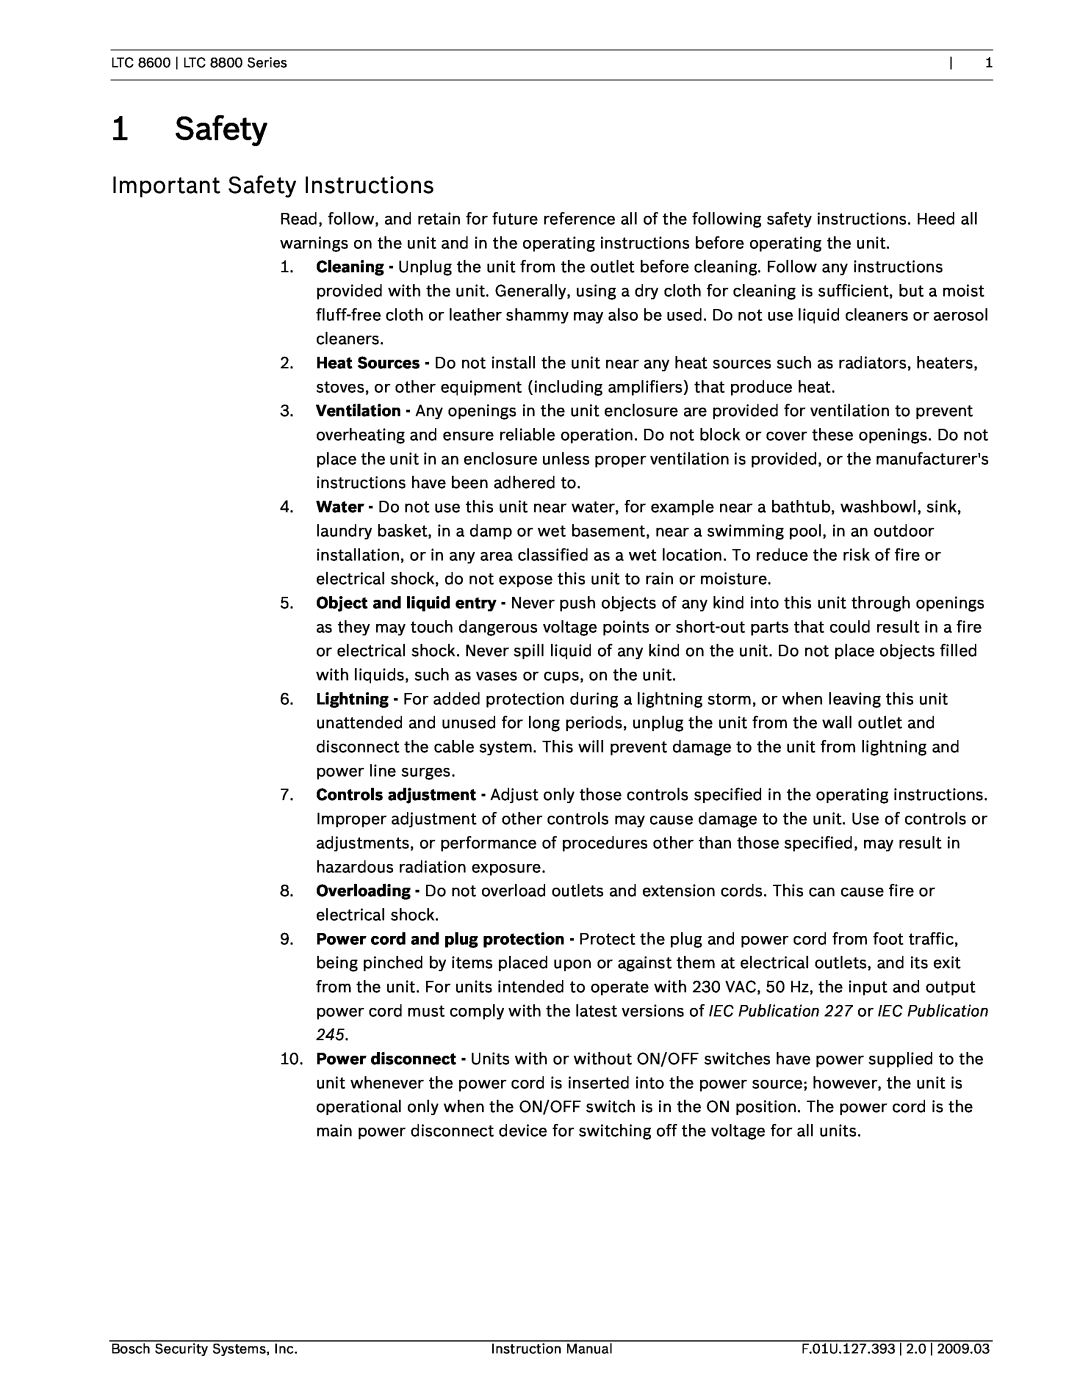 Bosch Appliances LTC 8800, LTC 8600 instruction manual Important Safety Instructions 